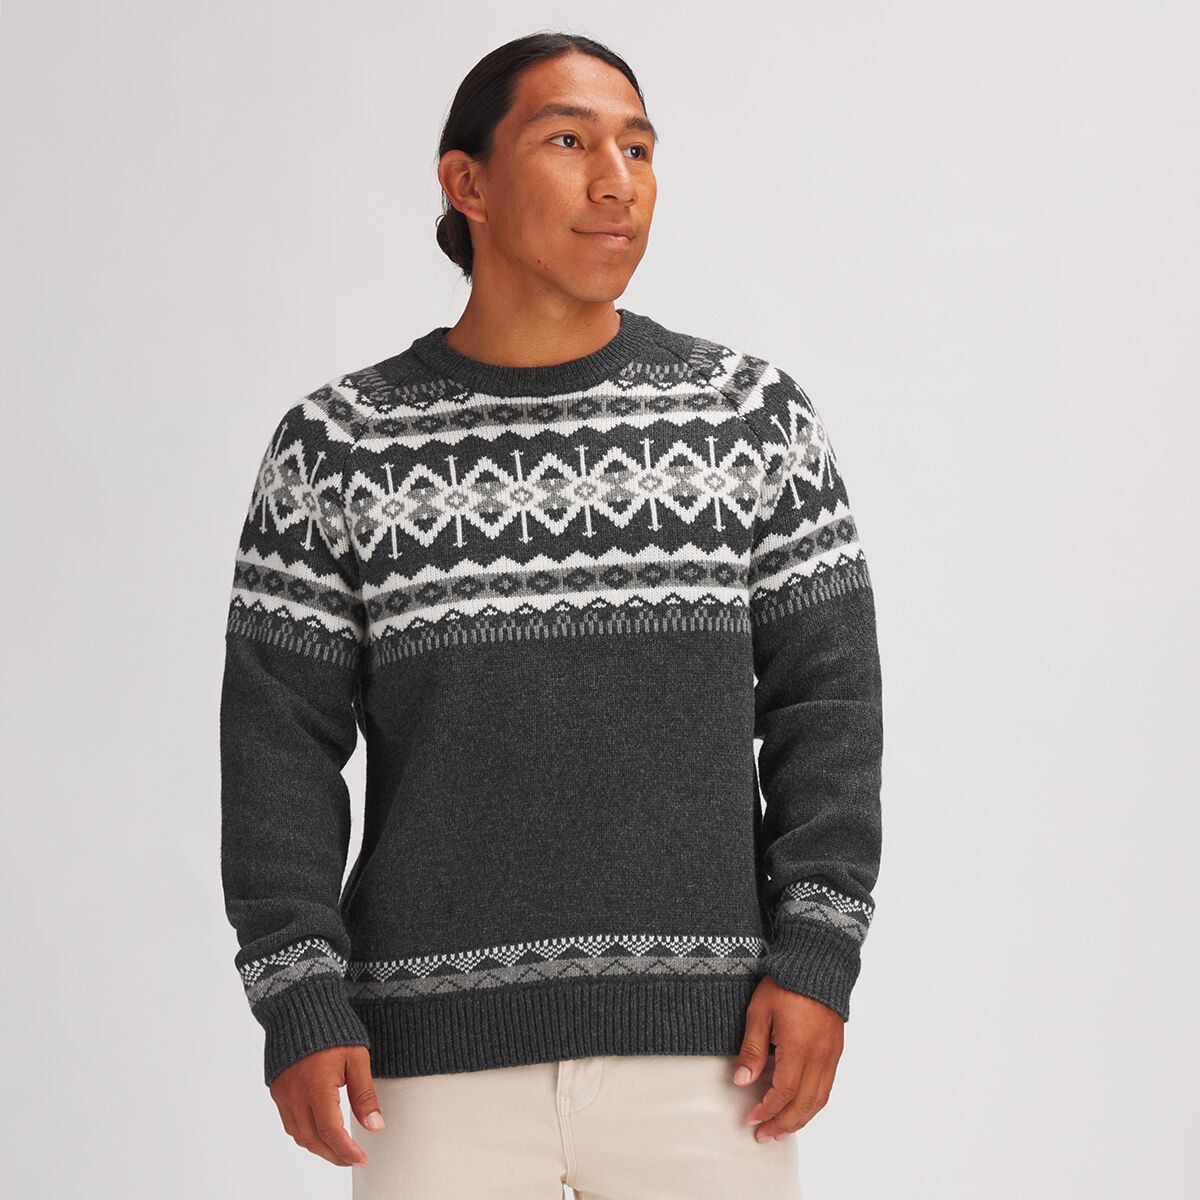 Backcountry Wool Fair Isle Sweater - Men's